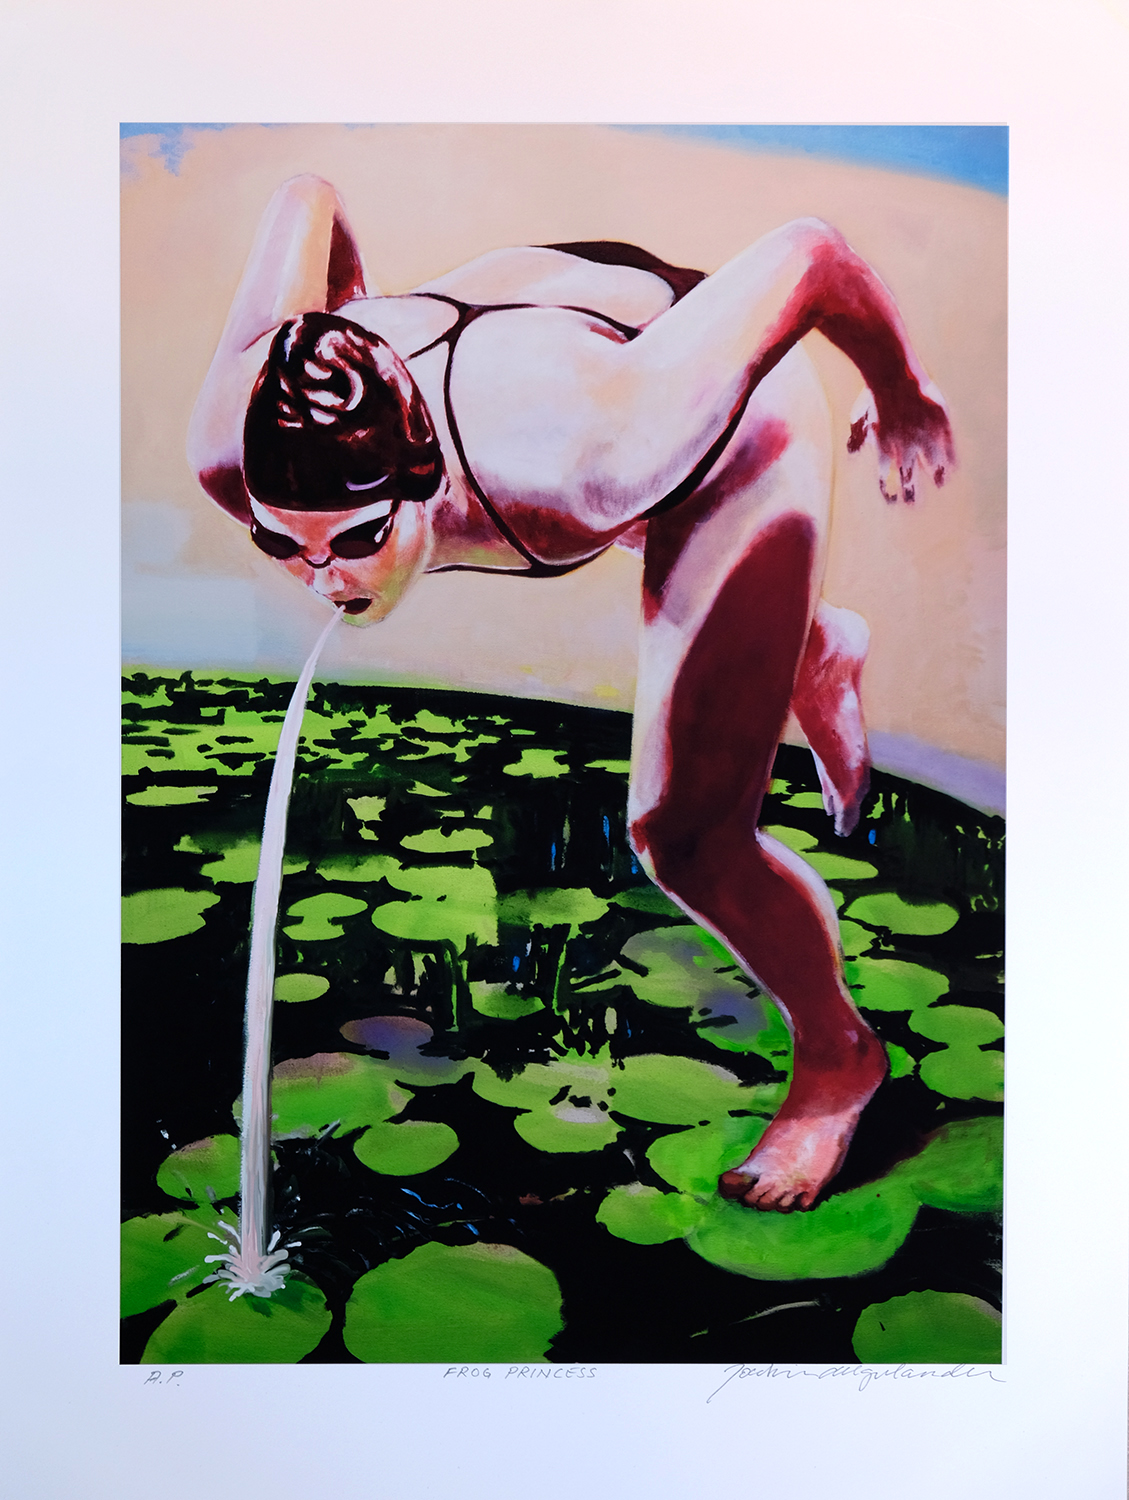 Joakim Allgulander - Frog princess, lithograph